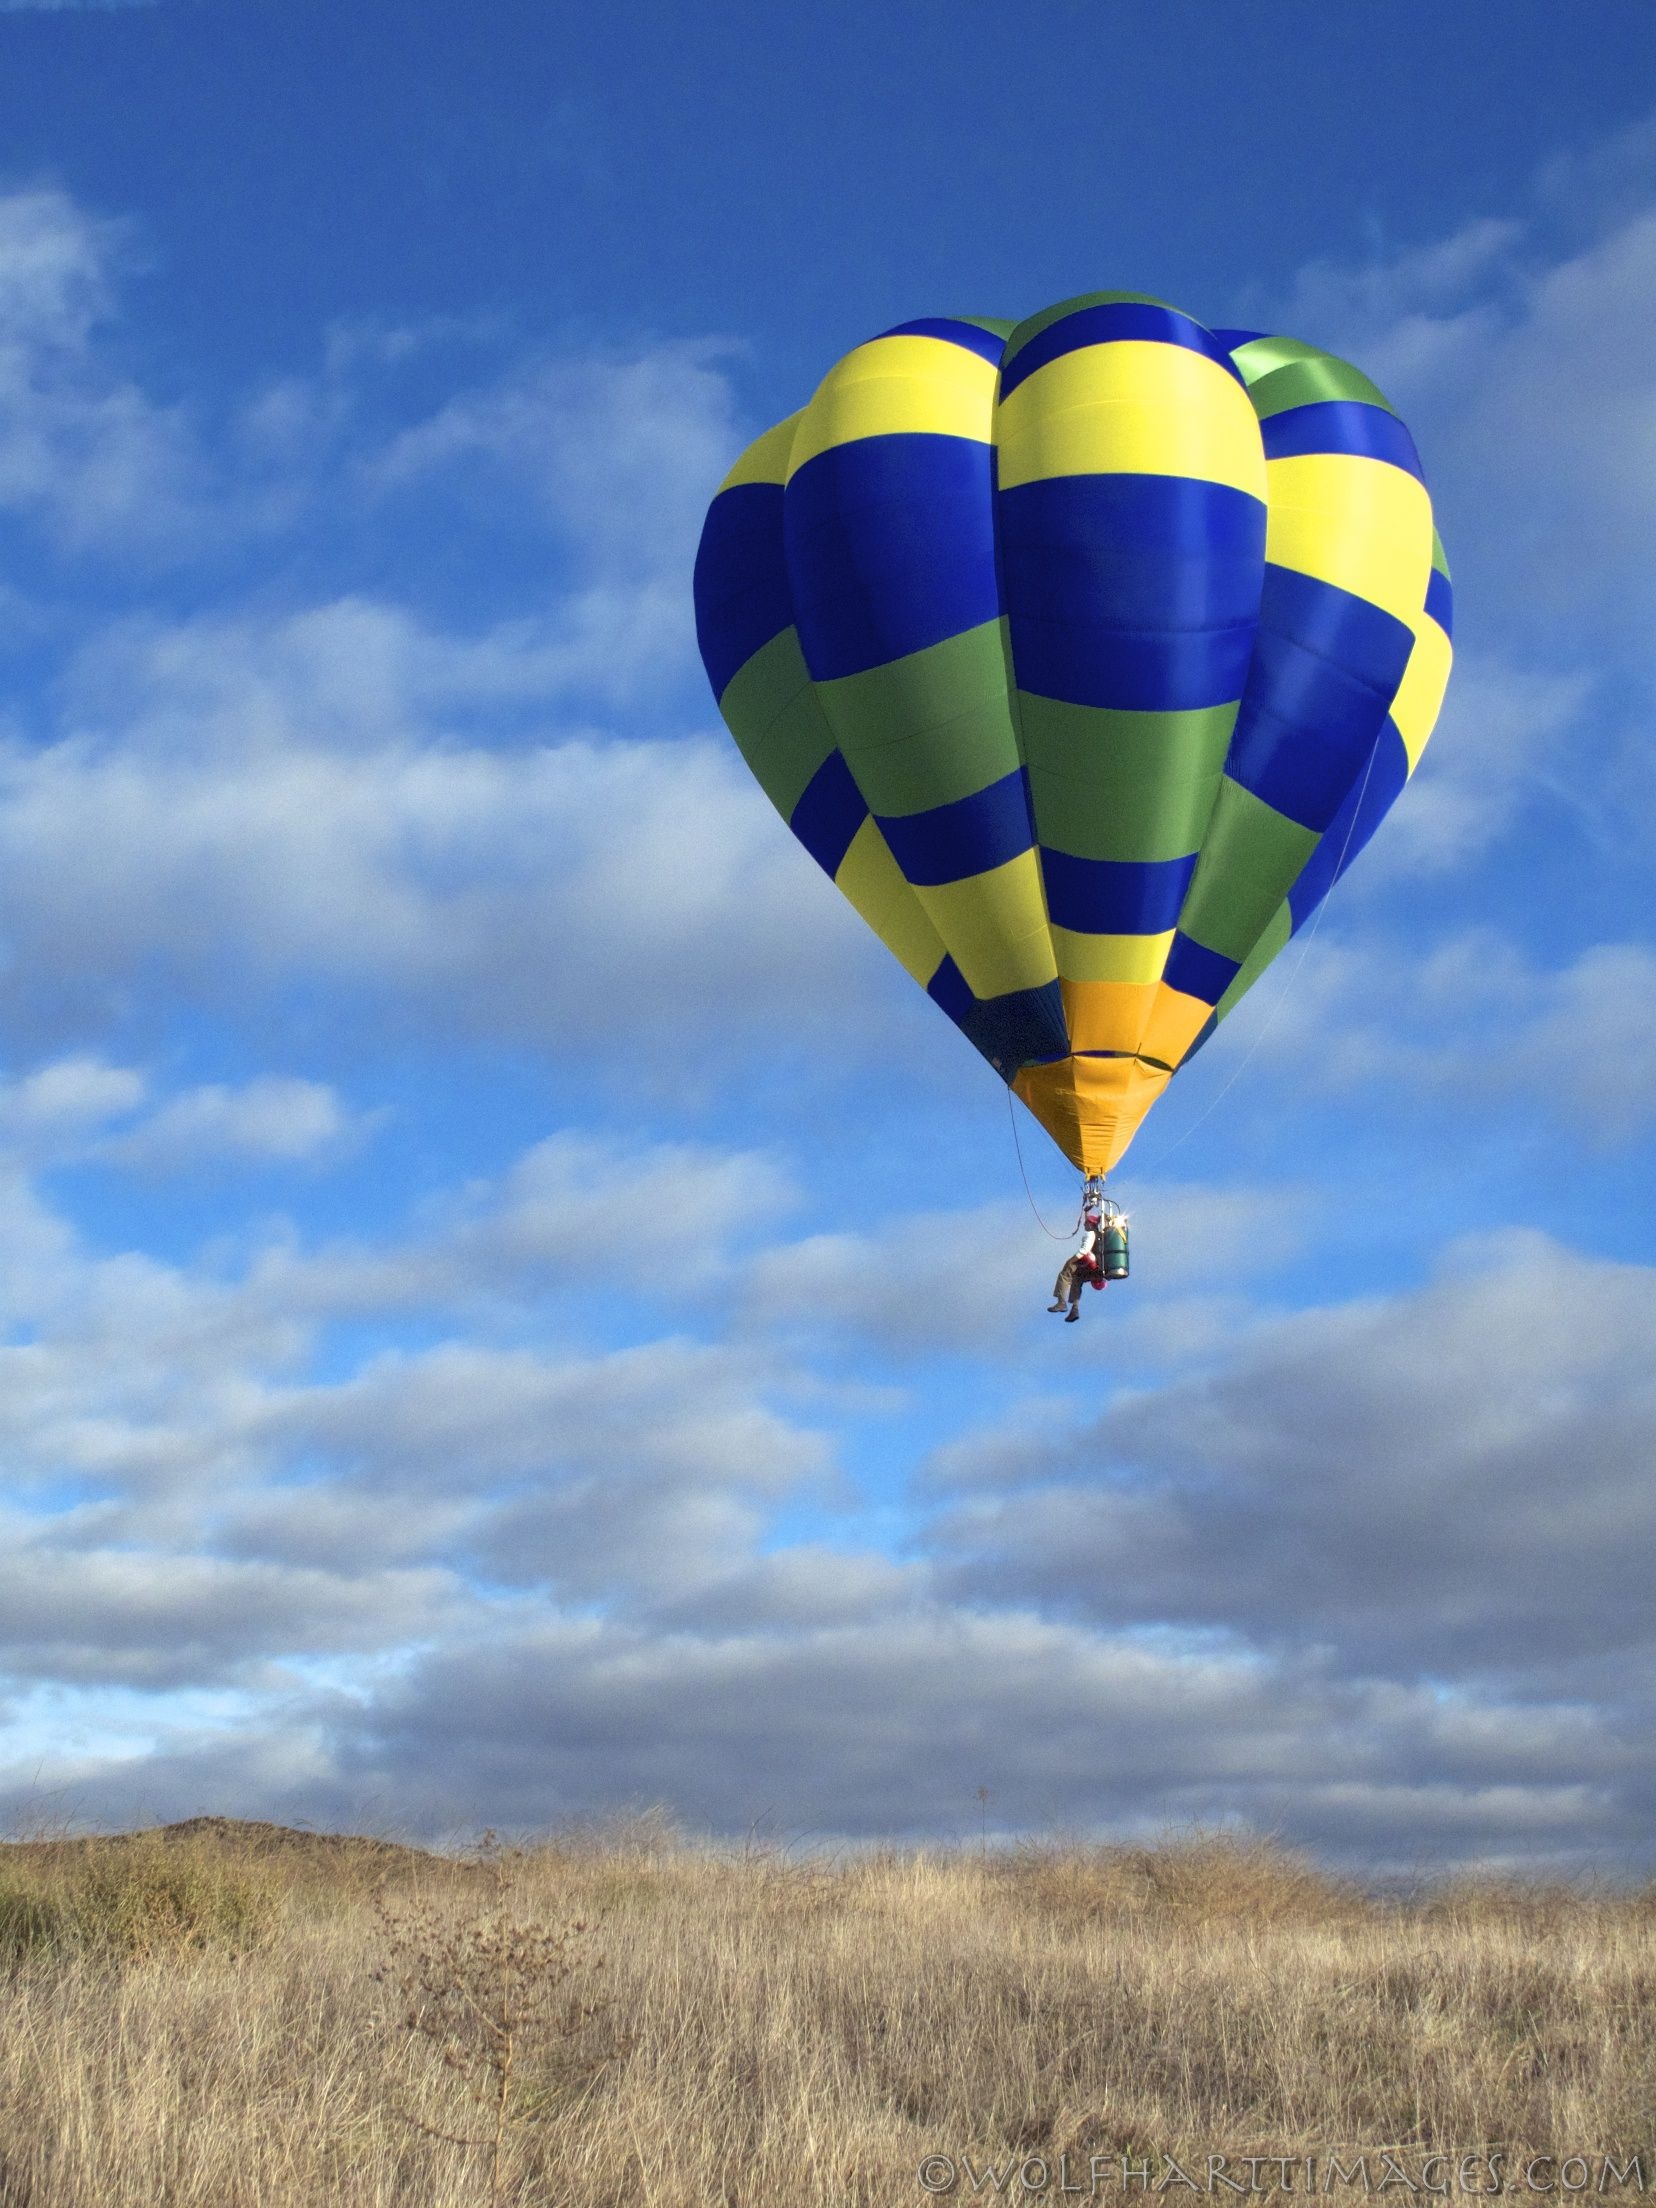 Hopper Ballooning: One-person hot air balloon, No basket balloon, Ultralight aviation. 1660x2210 HD Background.